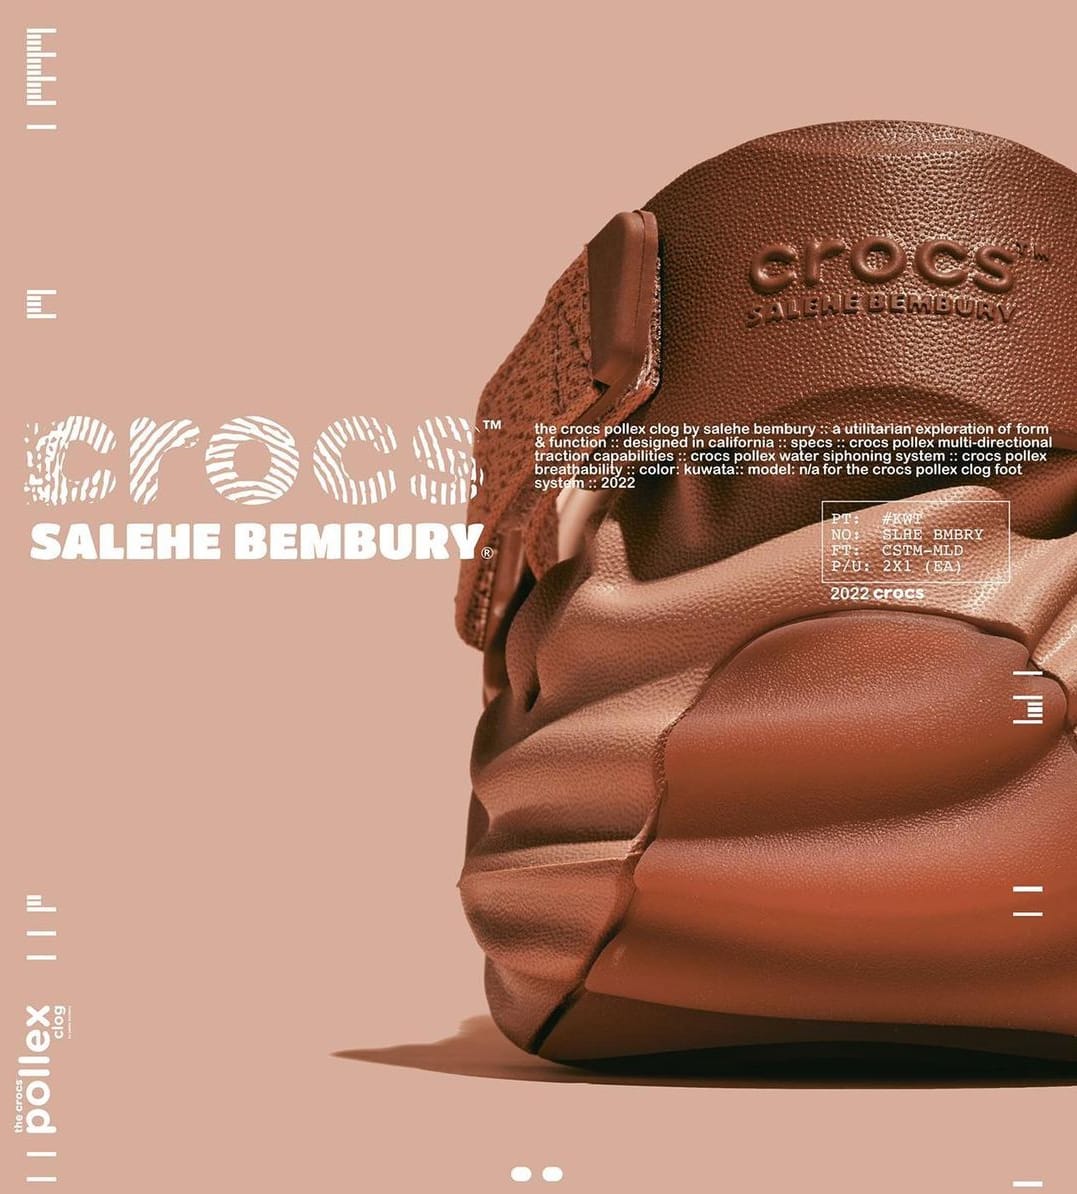 Salehe Bembury x Crocs Crocs Pollex Clog Release Date Price Info | Sole